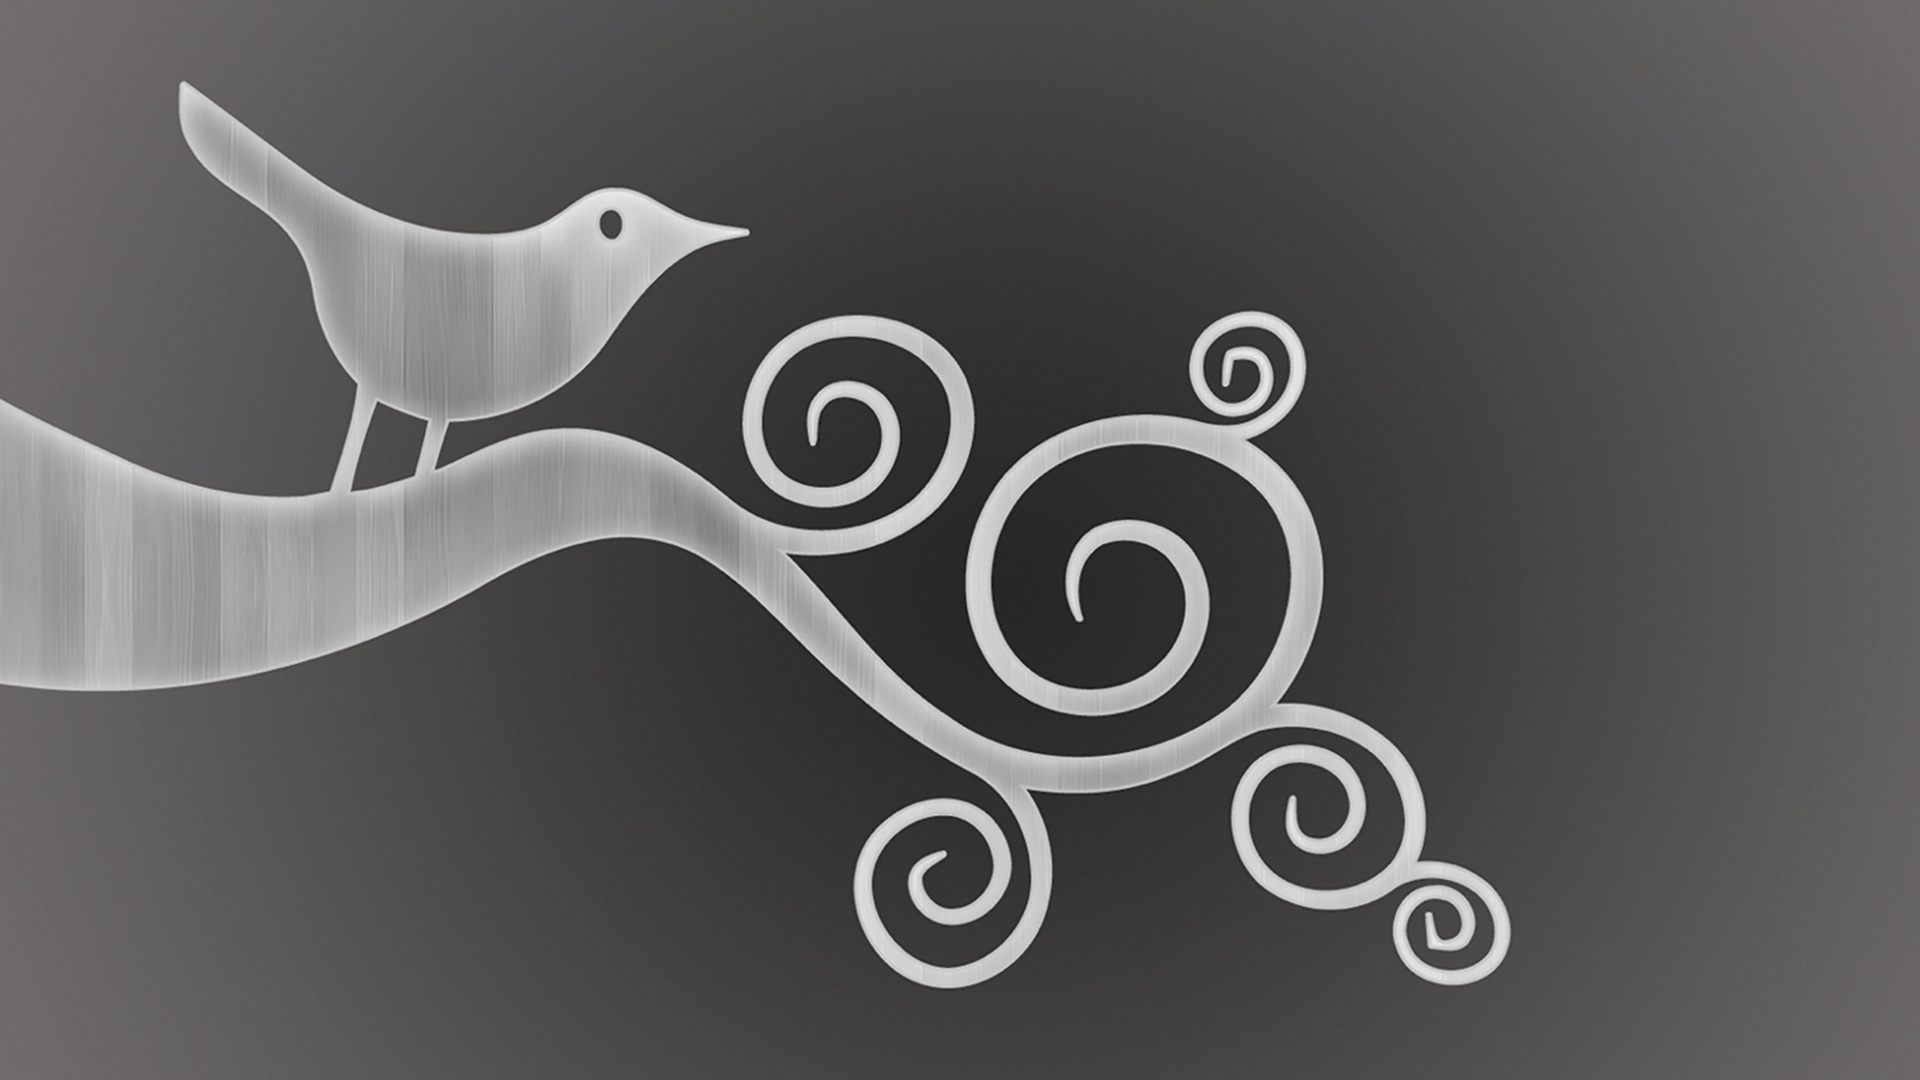 1914-birds-silver-metal-animals-gray-minimalism.jpg